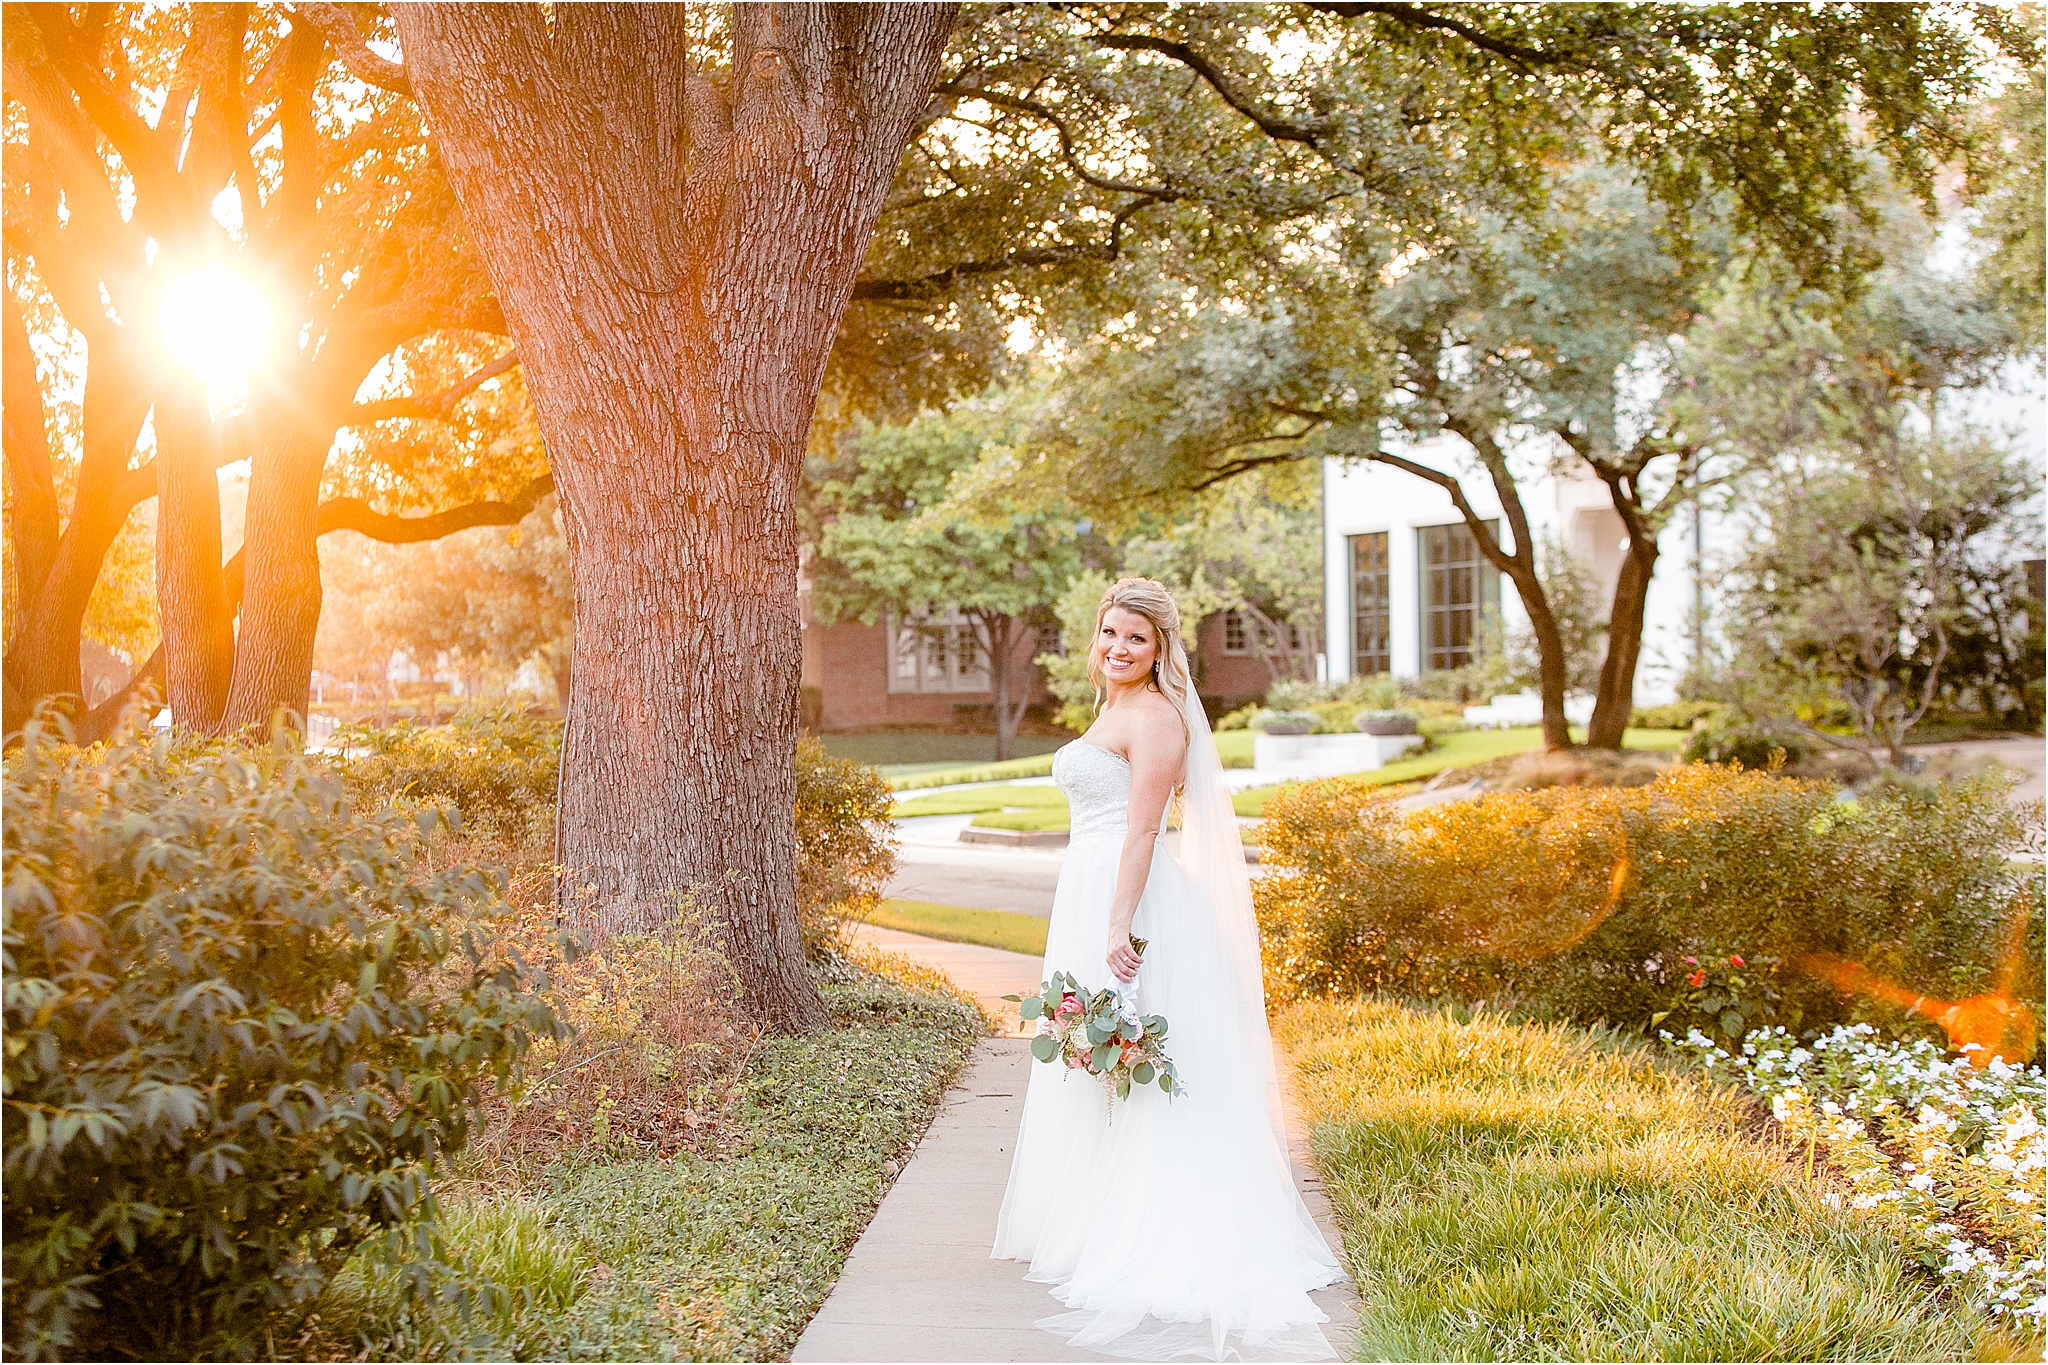 Outdoor Bridal Session in Dallas, Texas by Jillian Hogan PHotography 